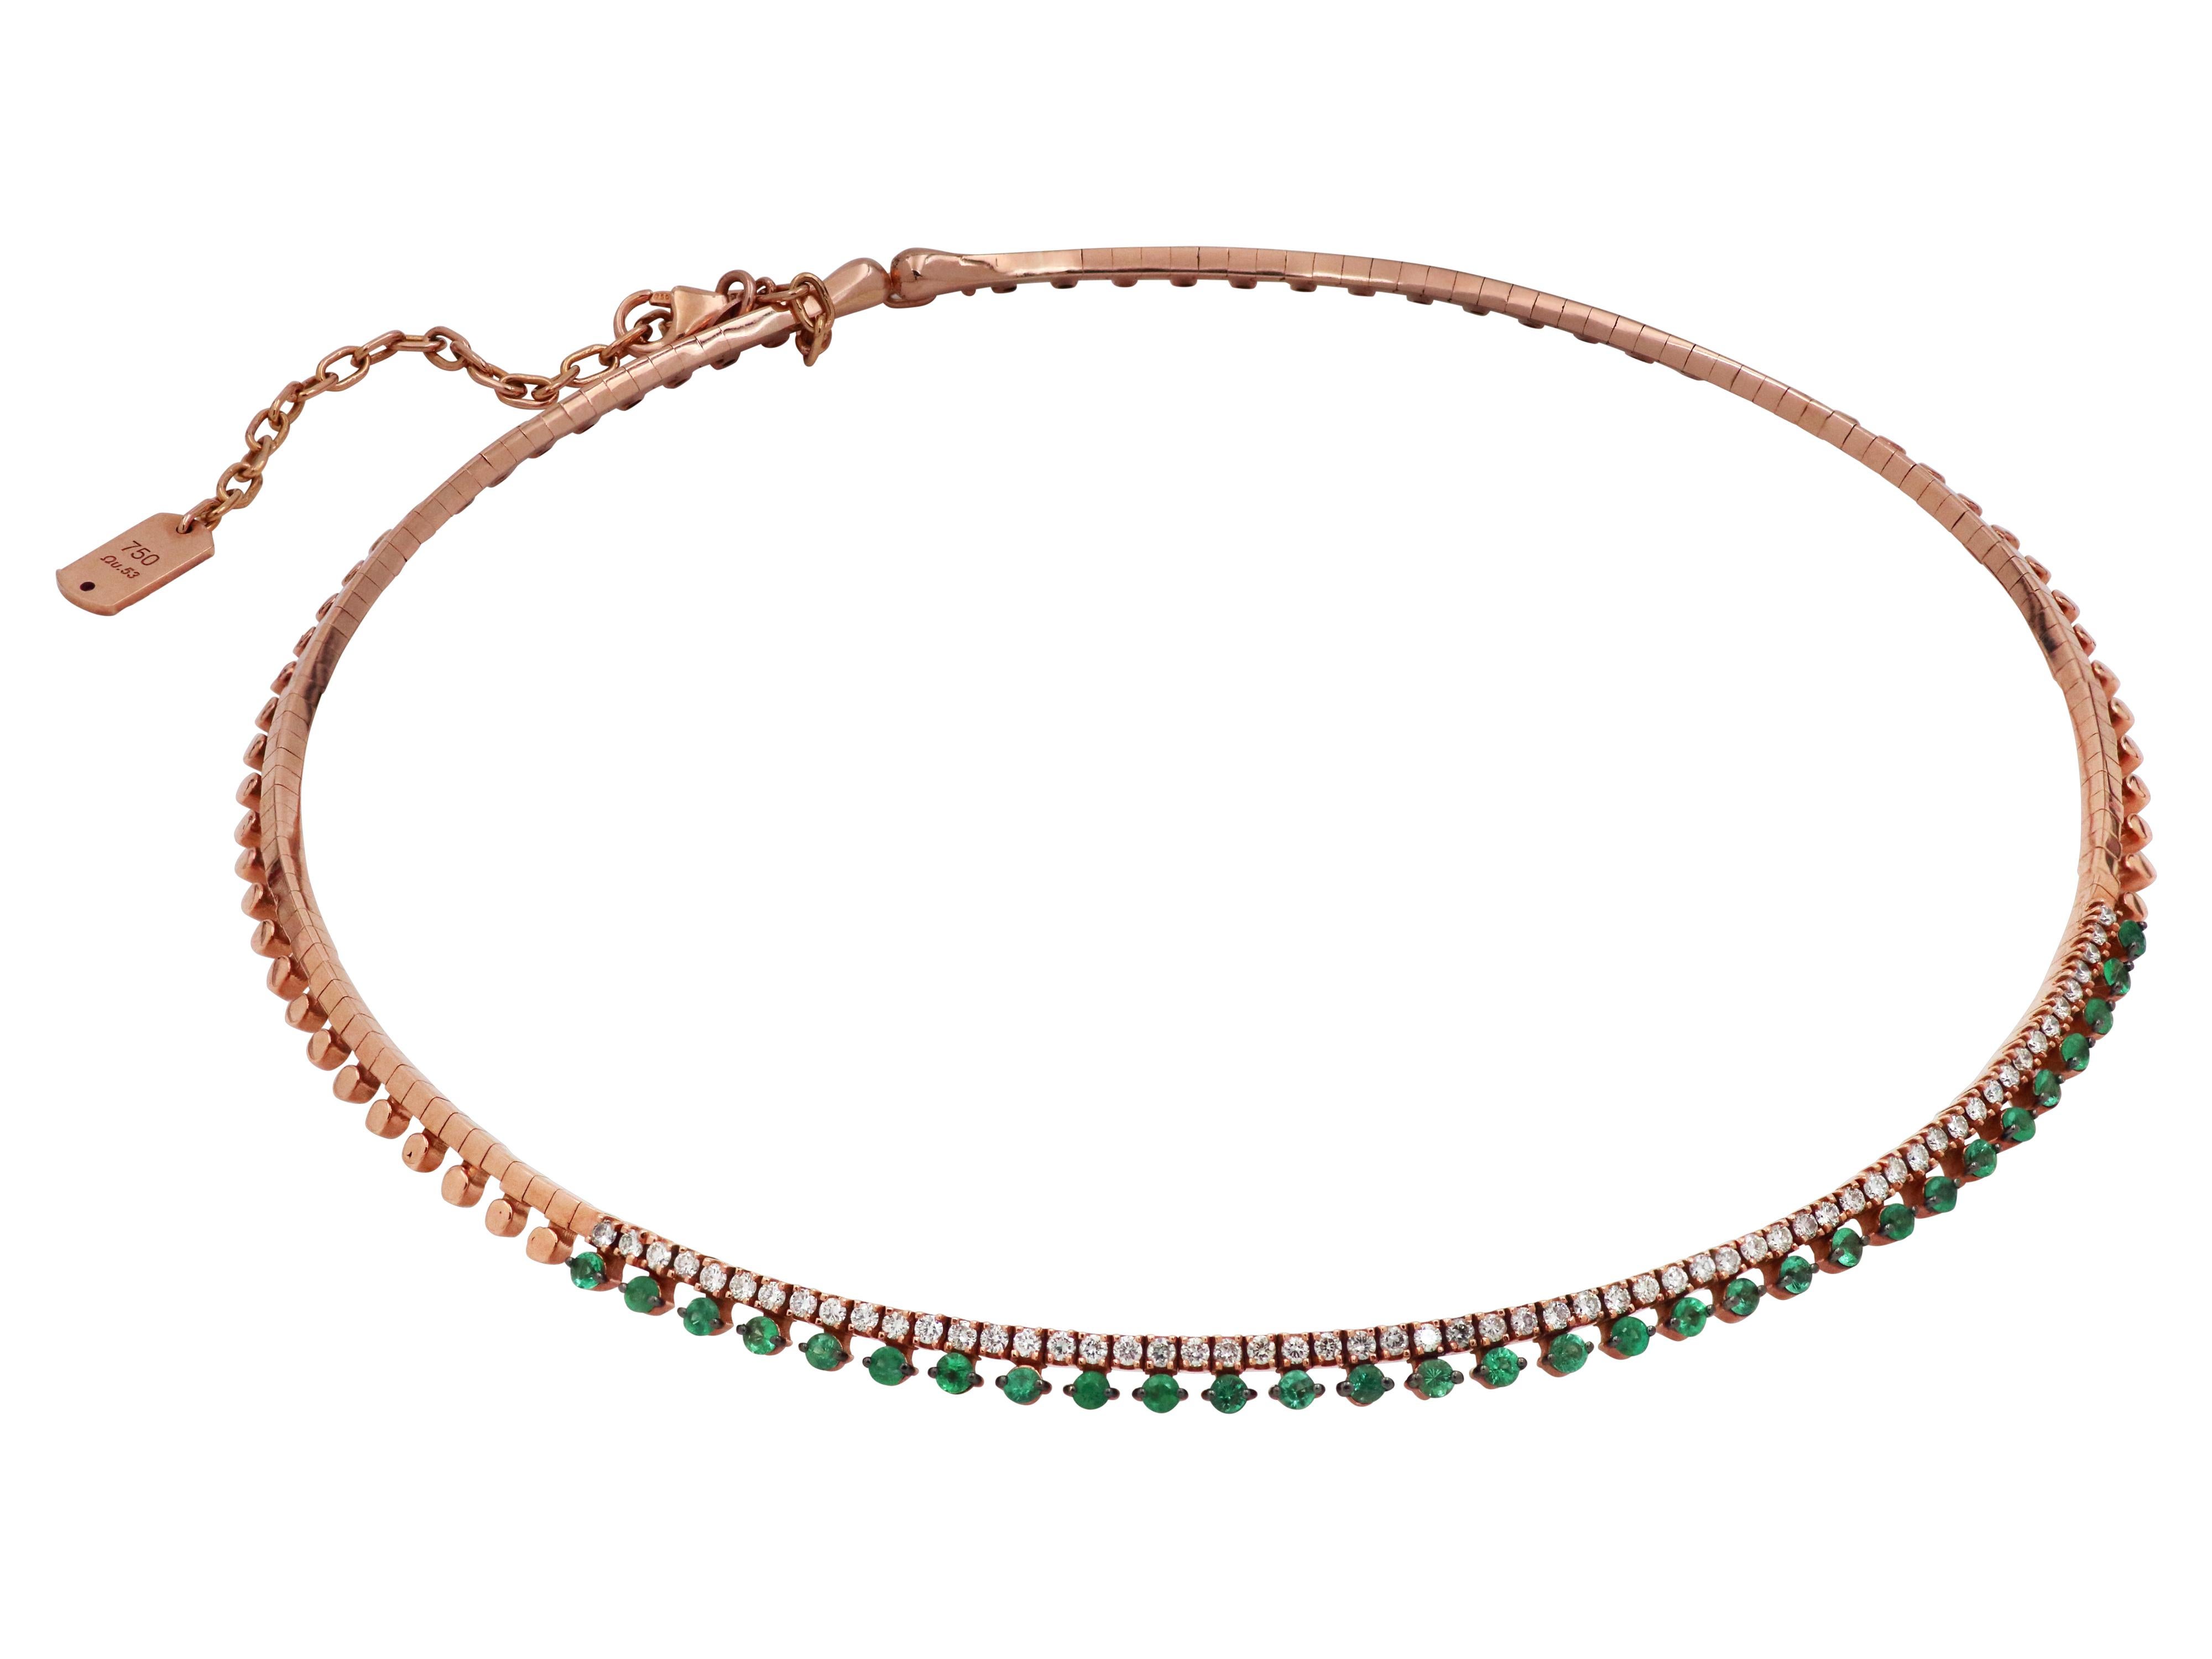 emerald collar necklace